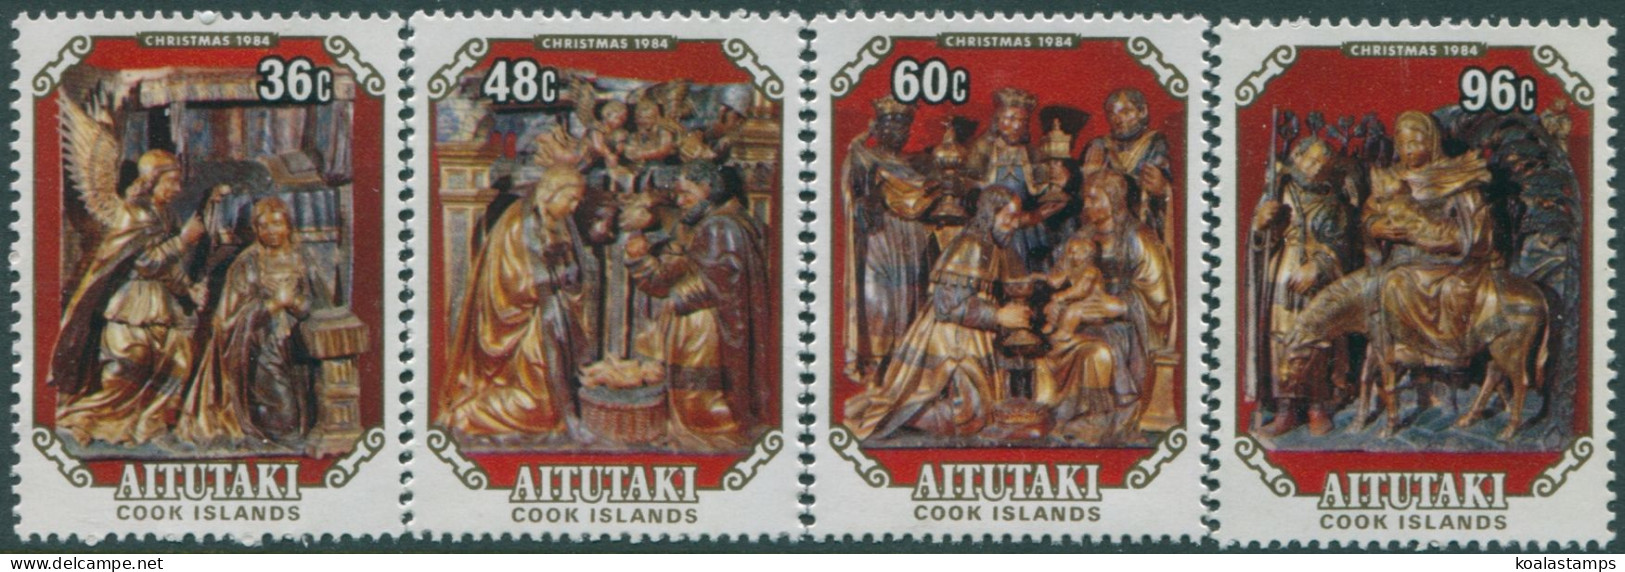 Aitutaki 1984 SG509-512 Christmas MNH - Cook